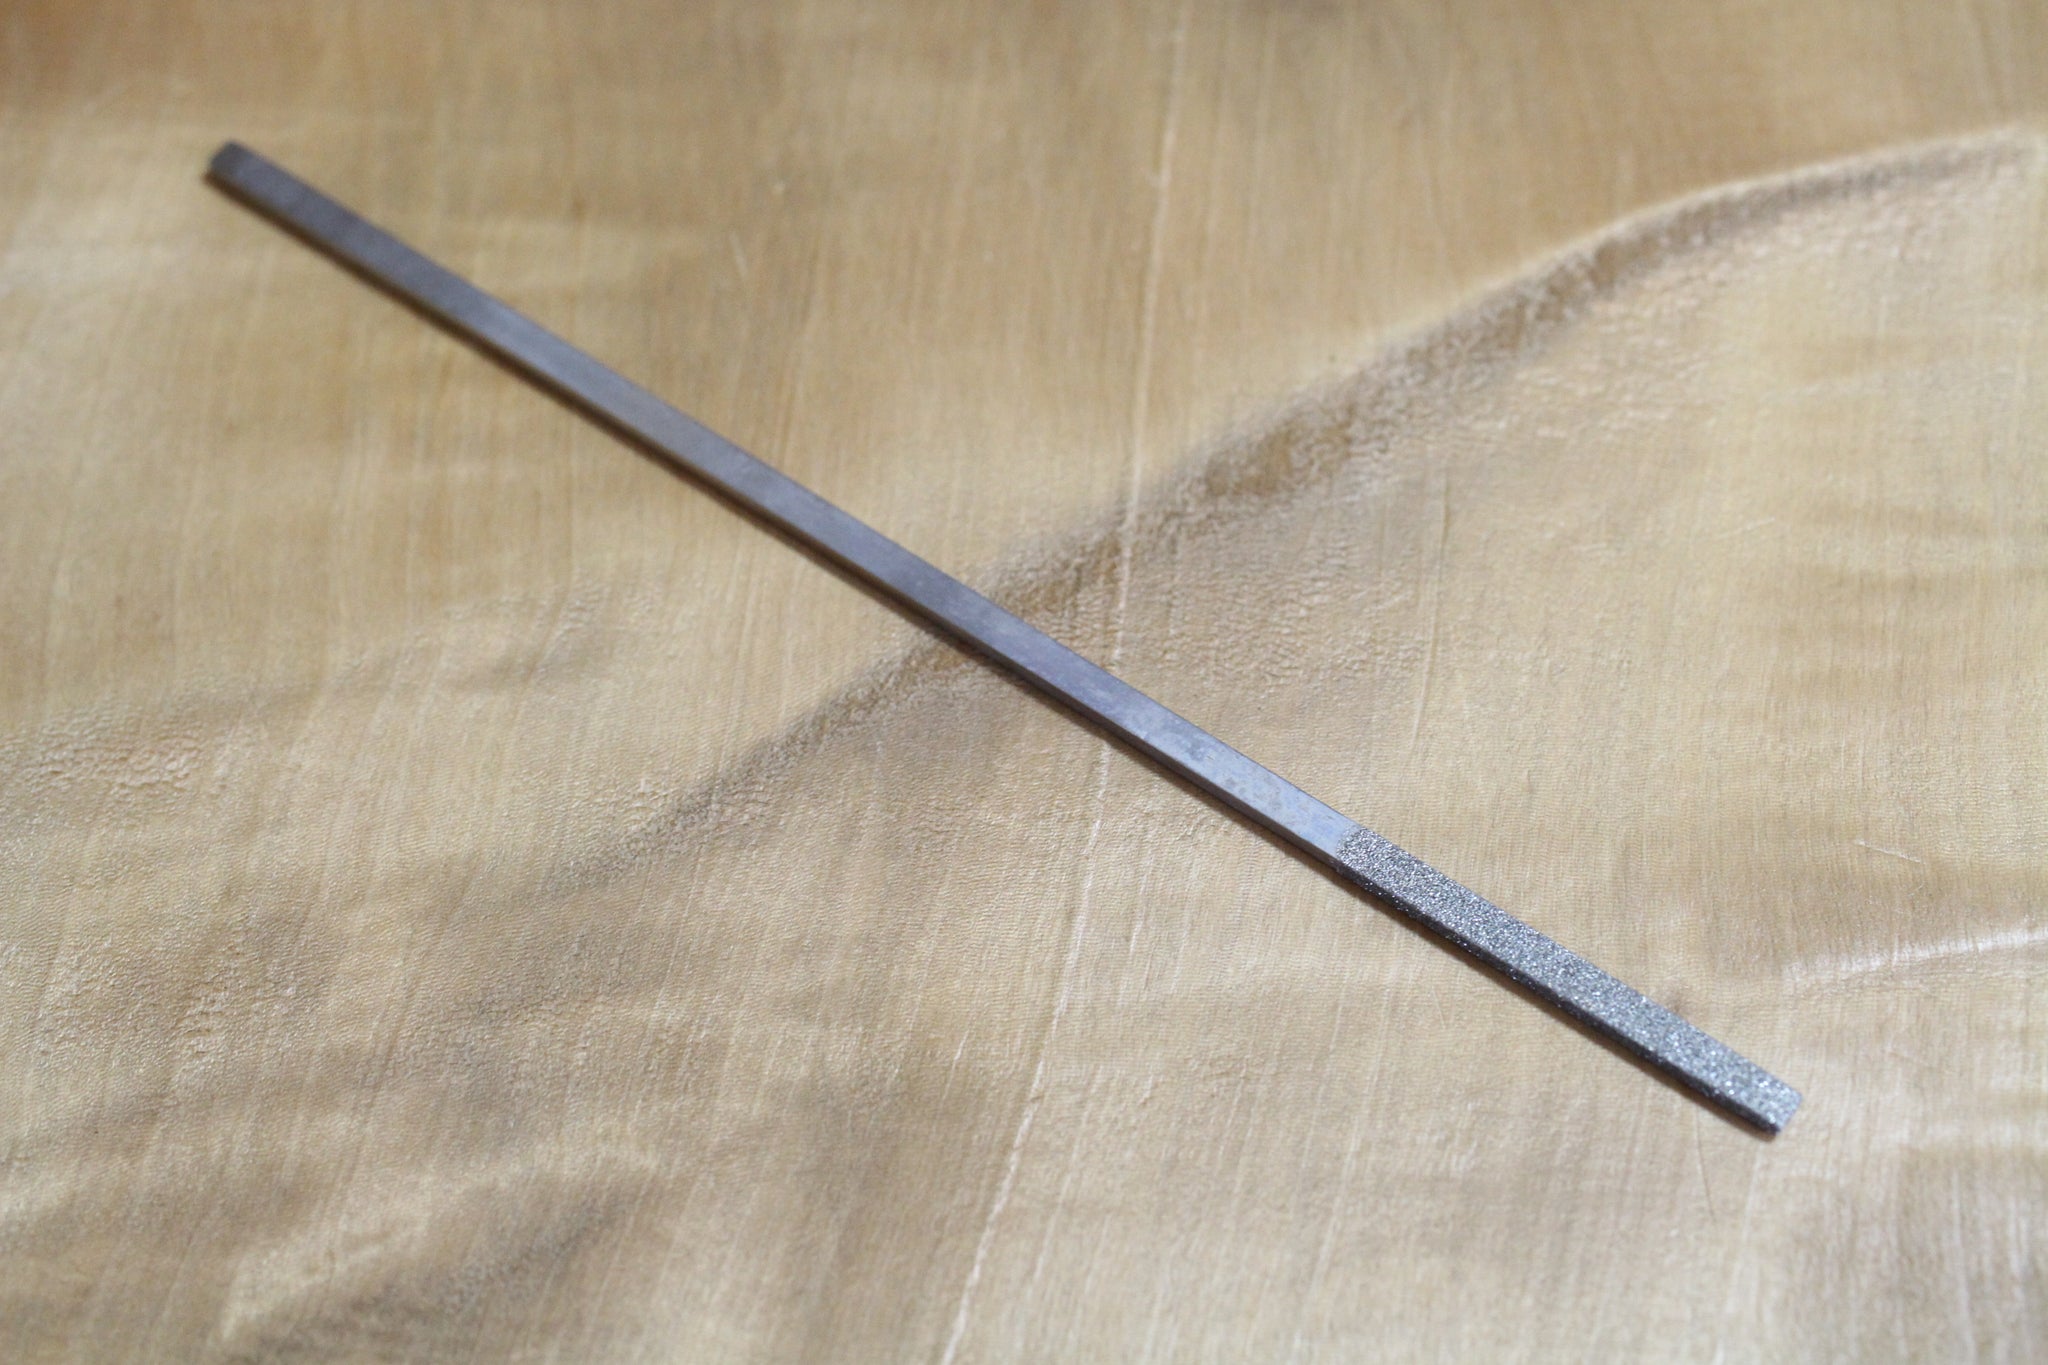 Japanese Flat Diamond file #120 precision custom knife making